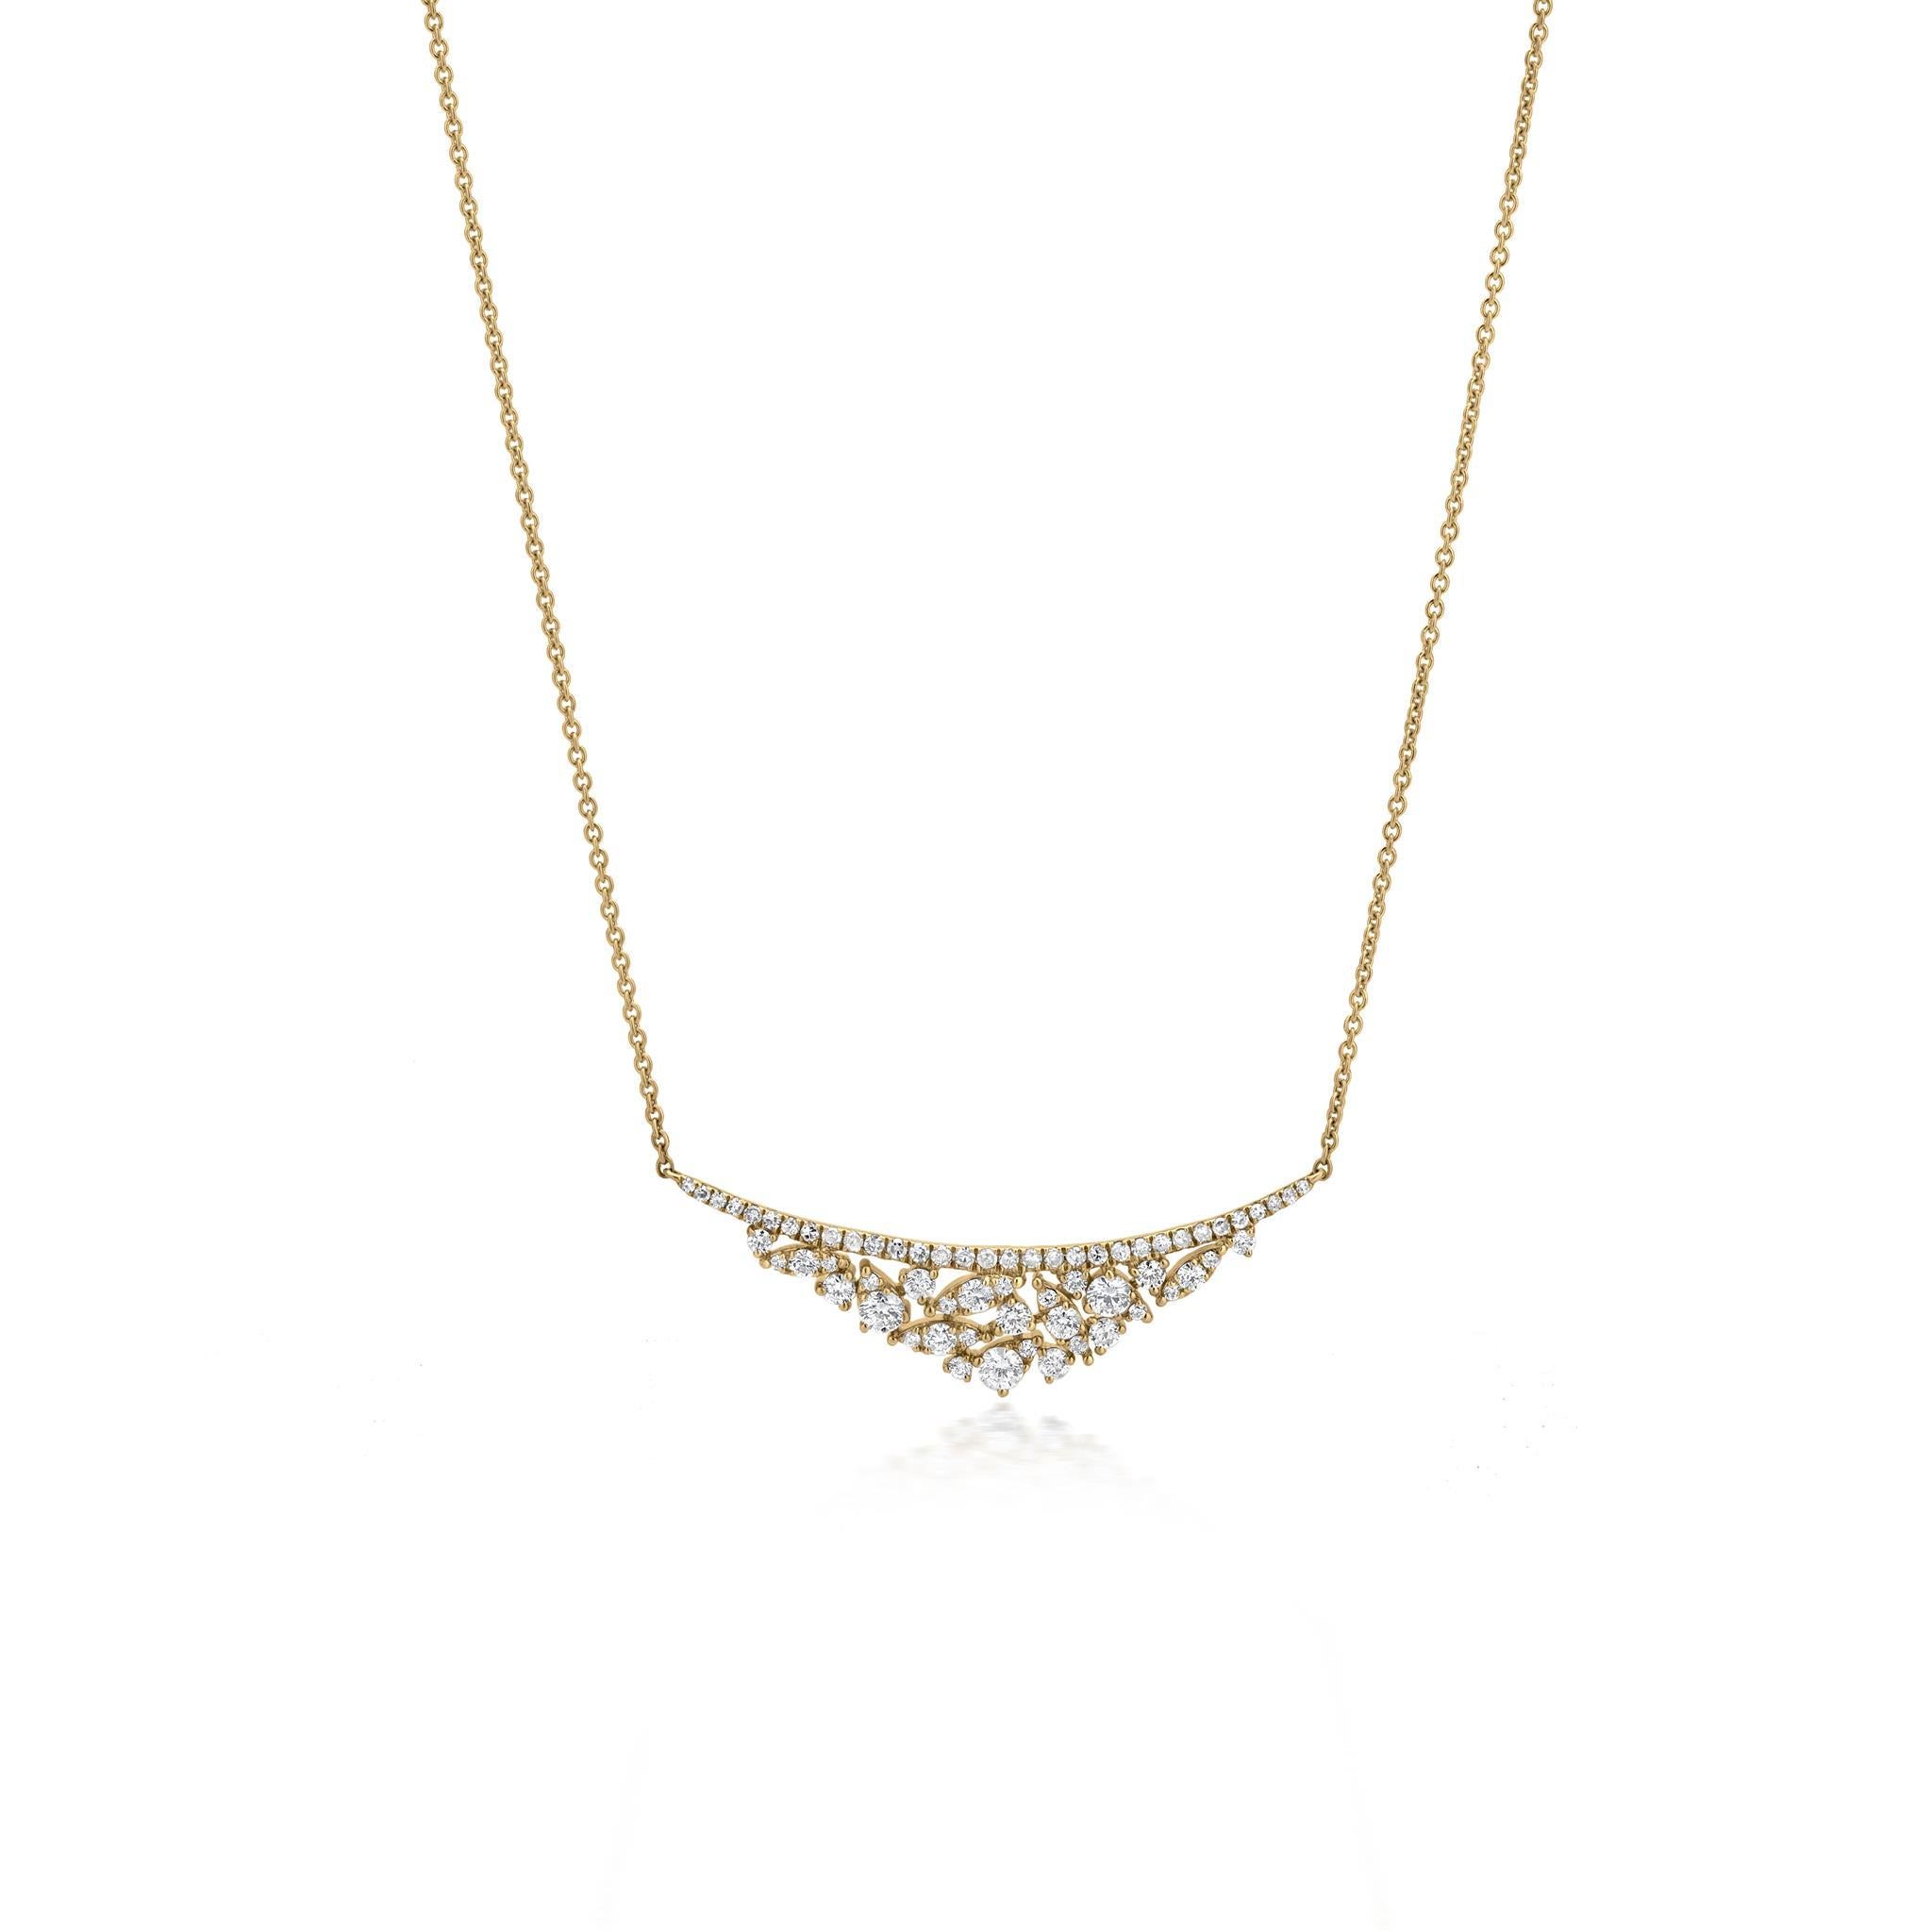 Contemporary Luxle .83cttw. Diamond Bar Pendant Necklace in 18k Yellow Gold